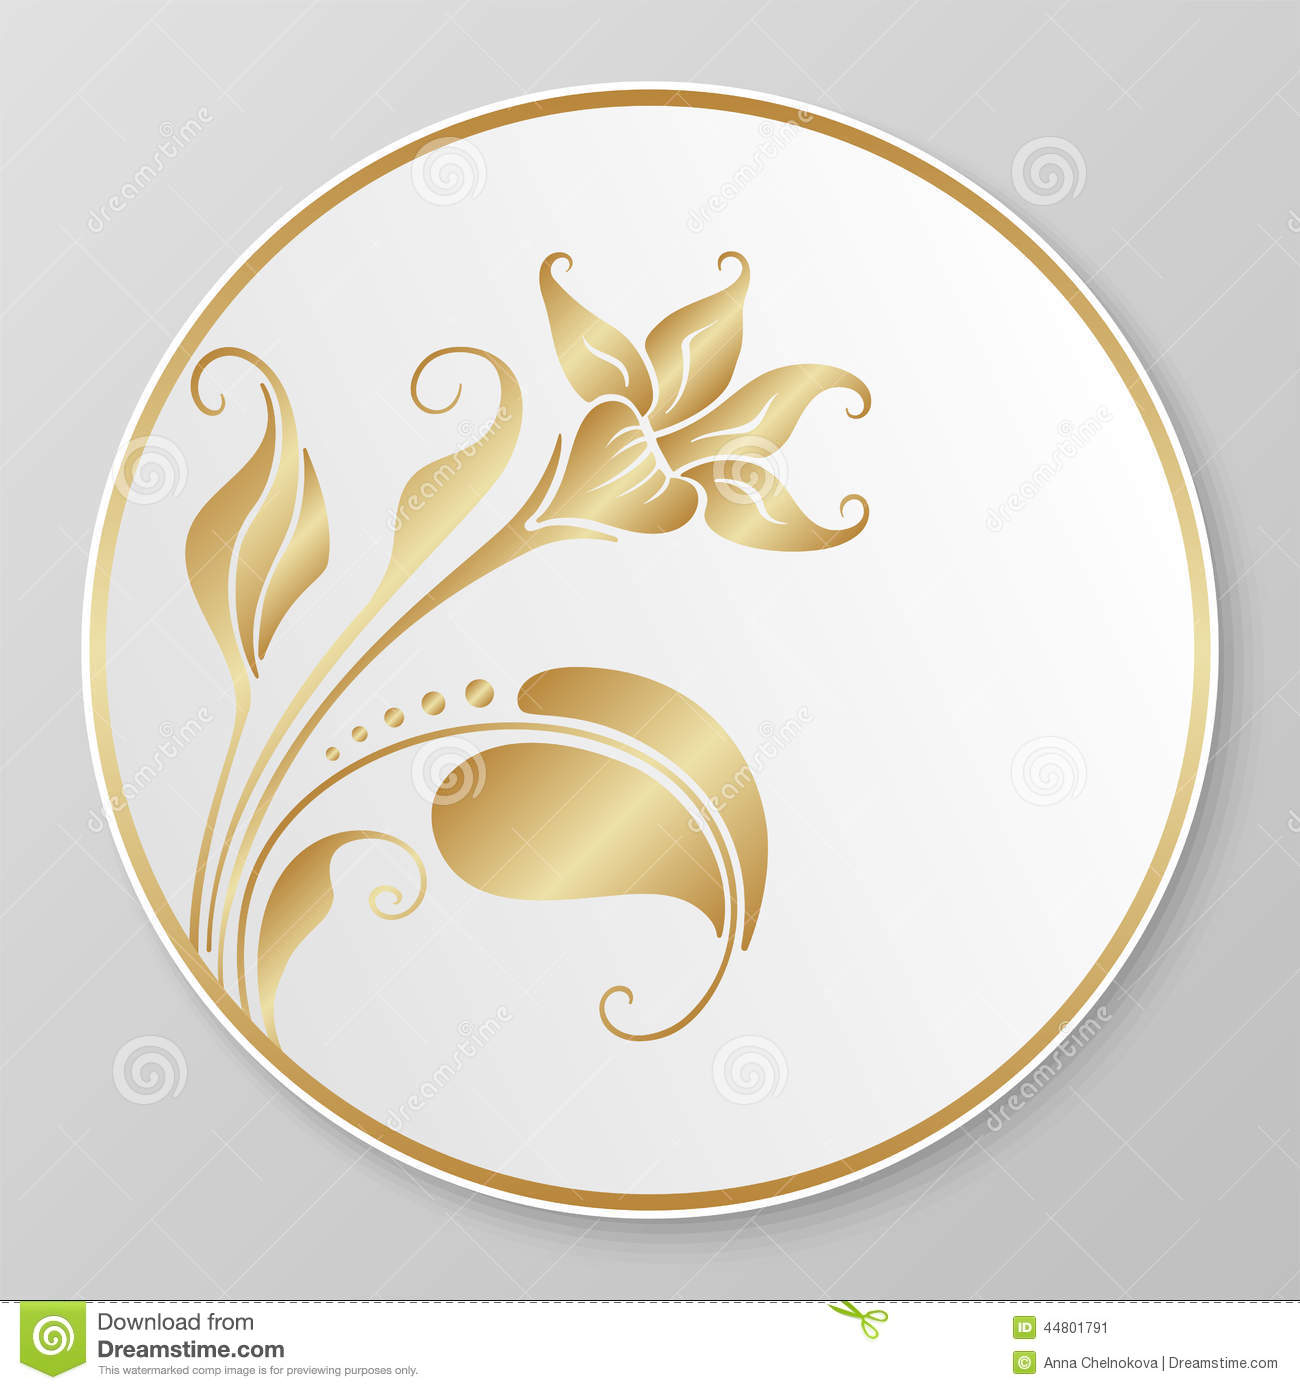 Gold Decorative Plate